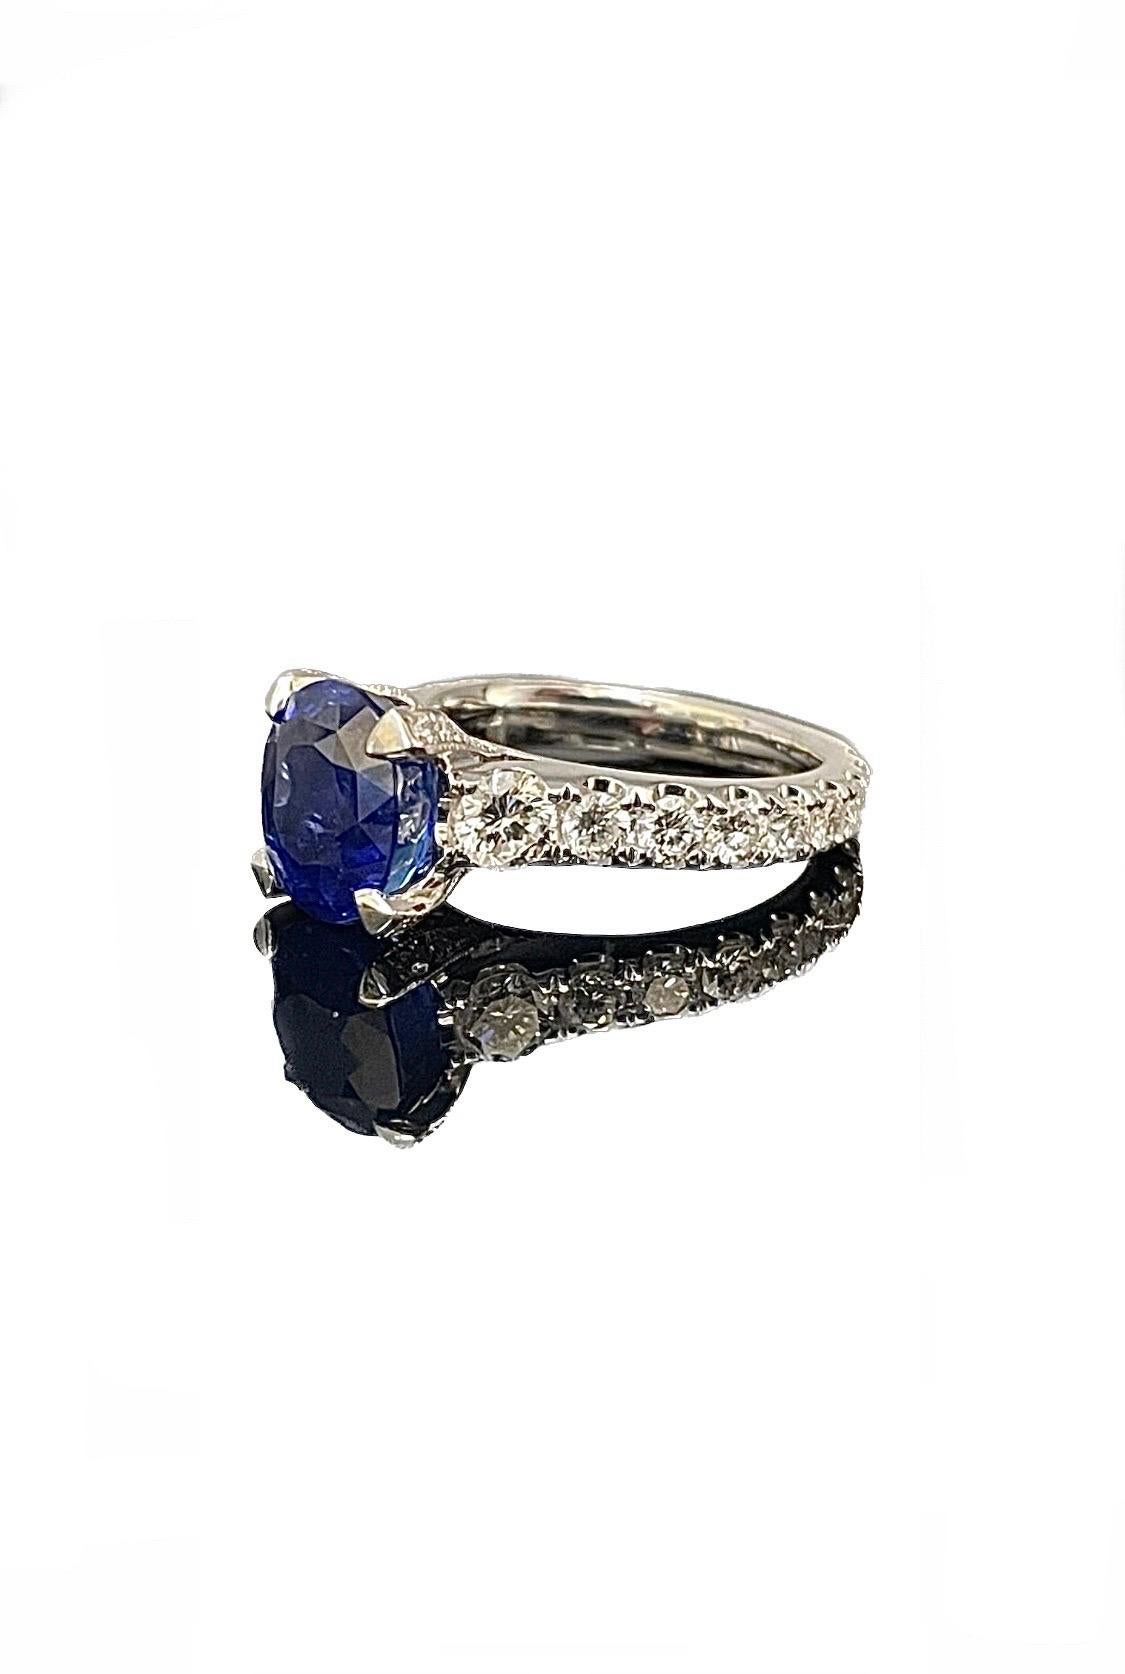 Oval Cut 18K GIA Certified No Hear Sri Lanka Sapphire and Diamond Ring  For Sale